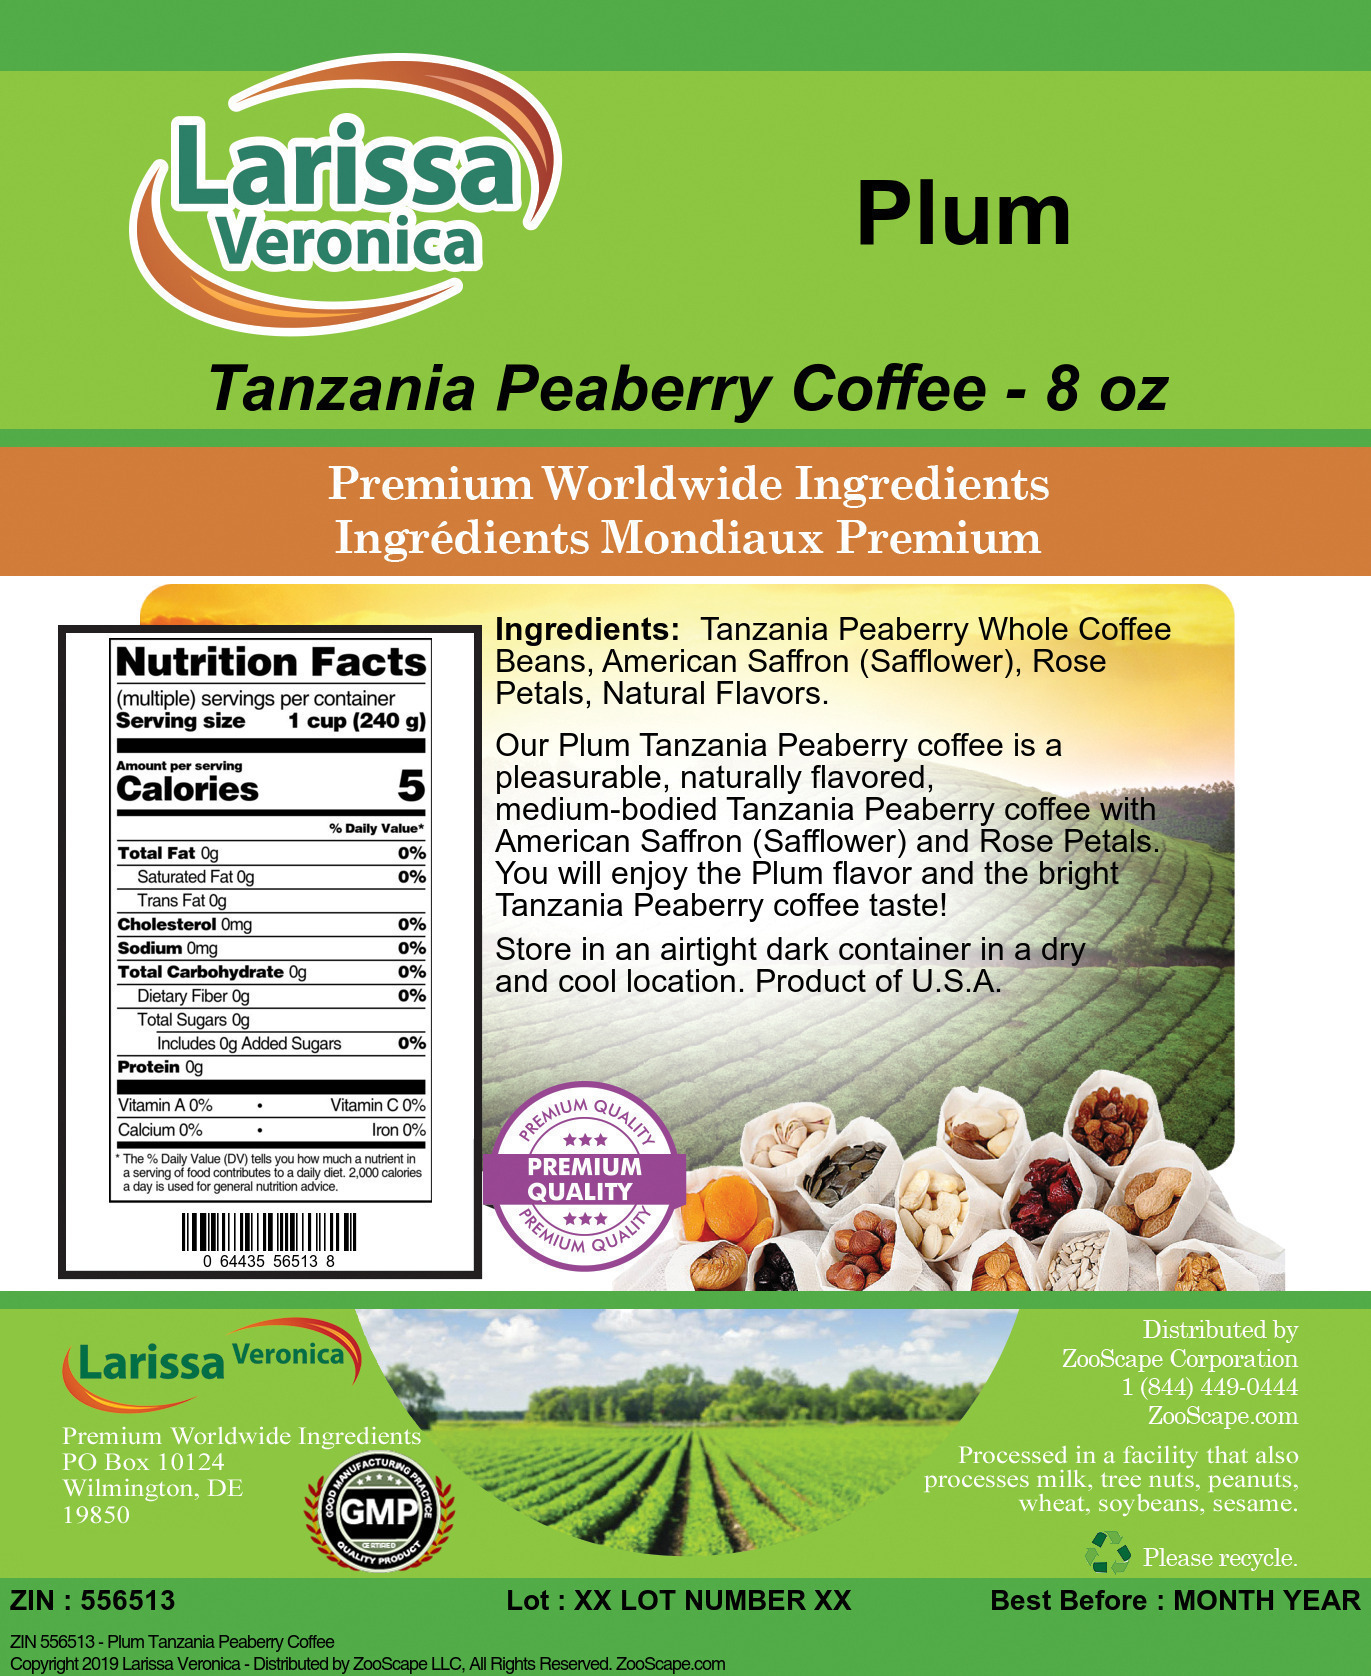 Plum Tanzania Peaberry Coffee - Label